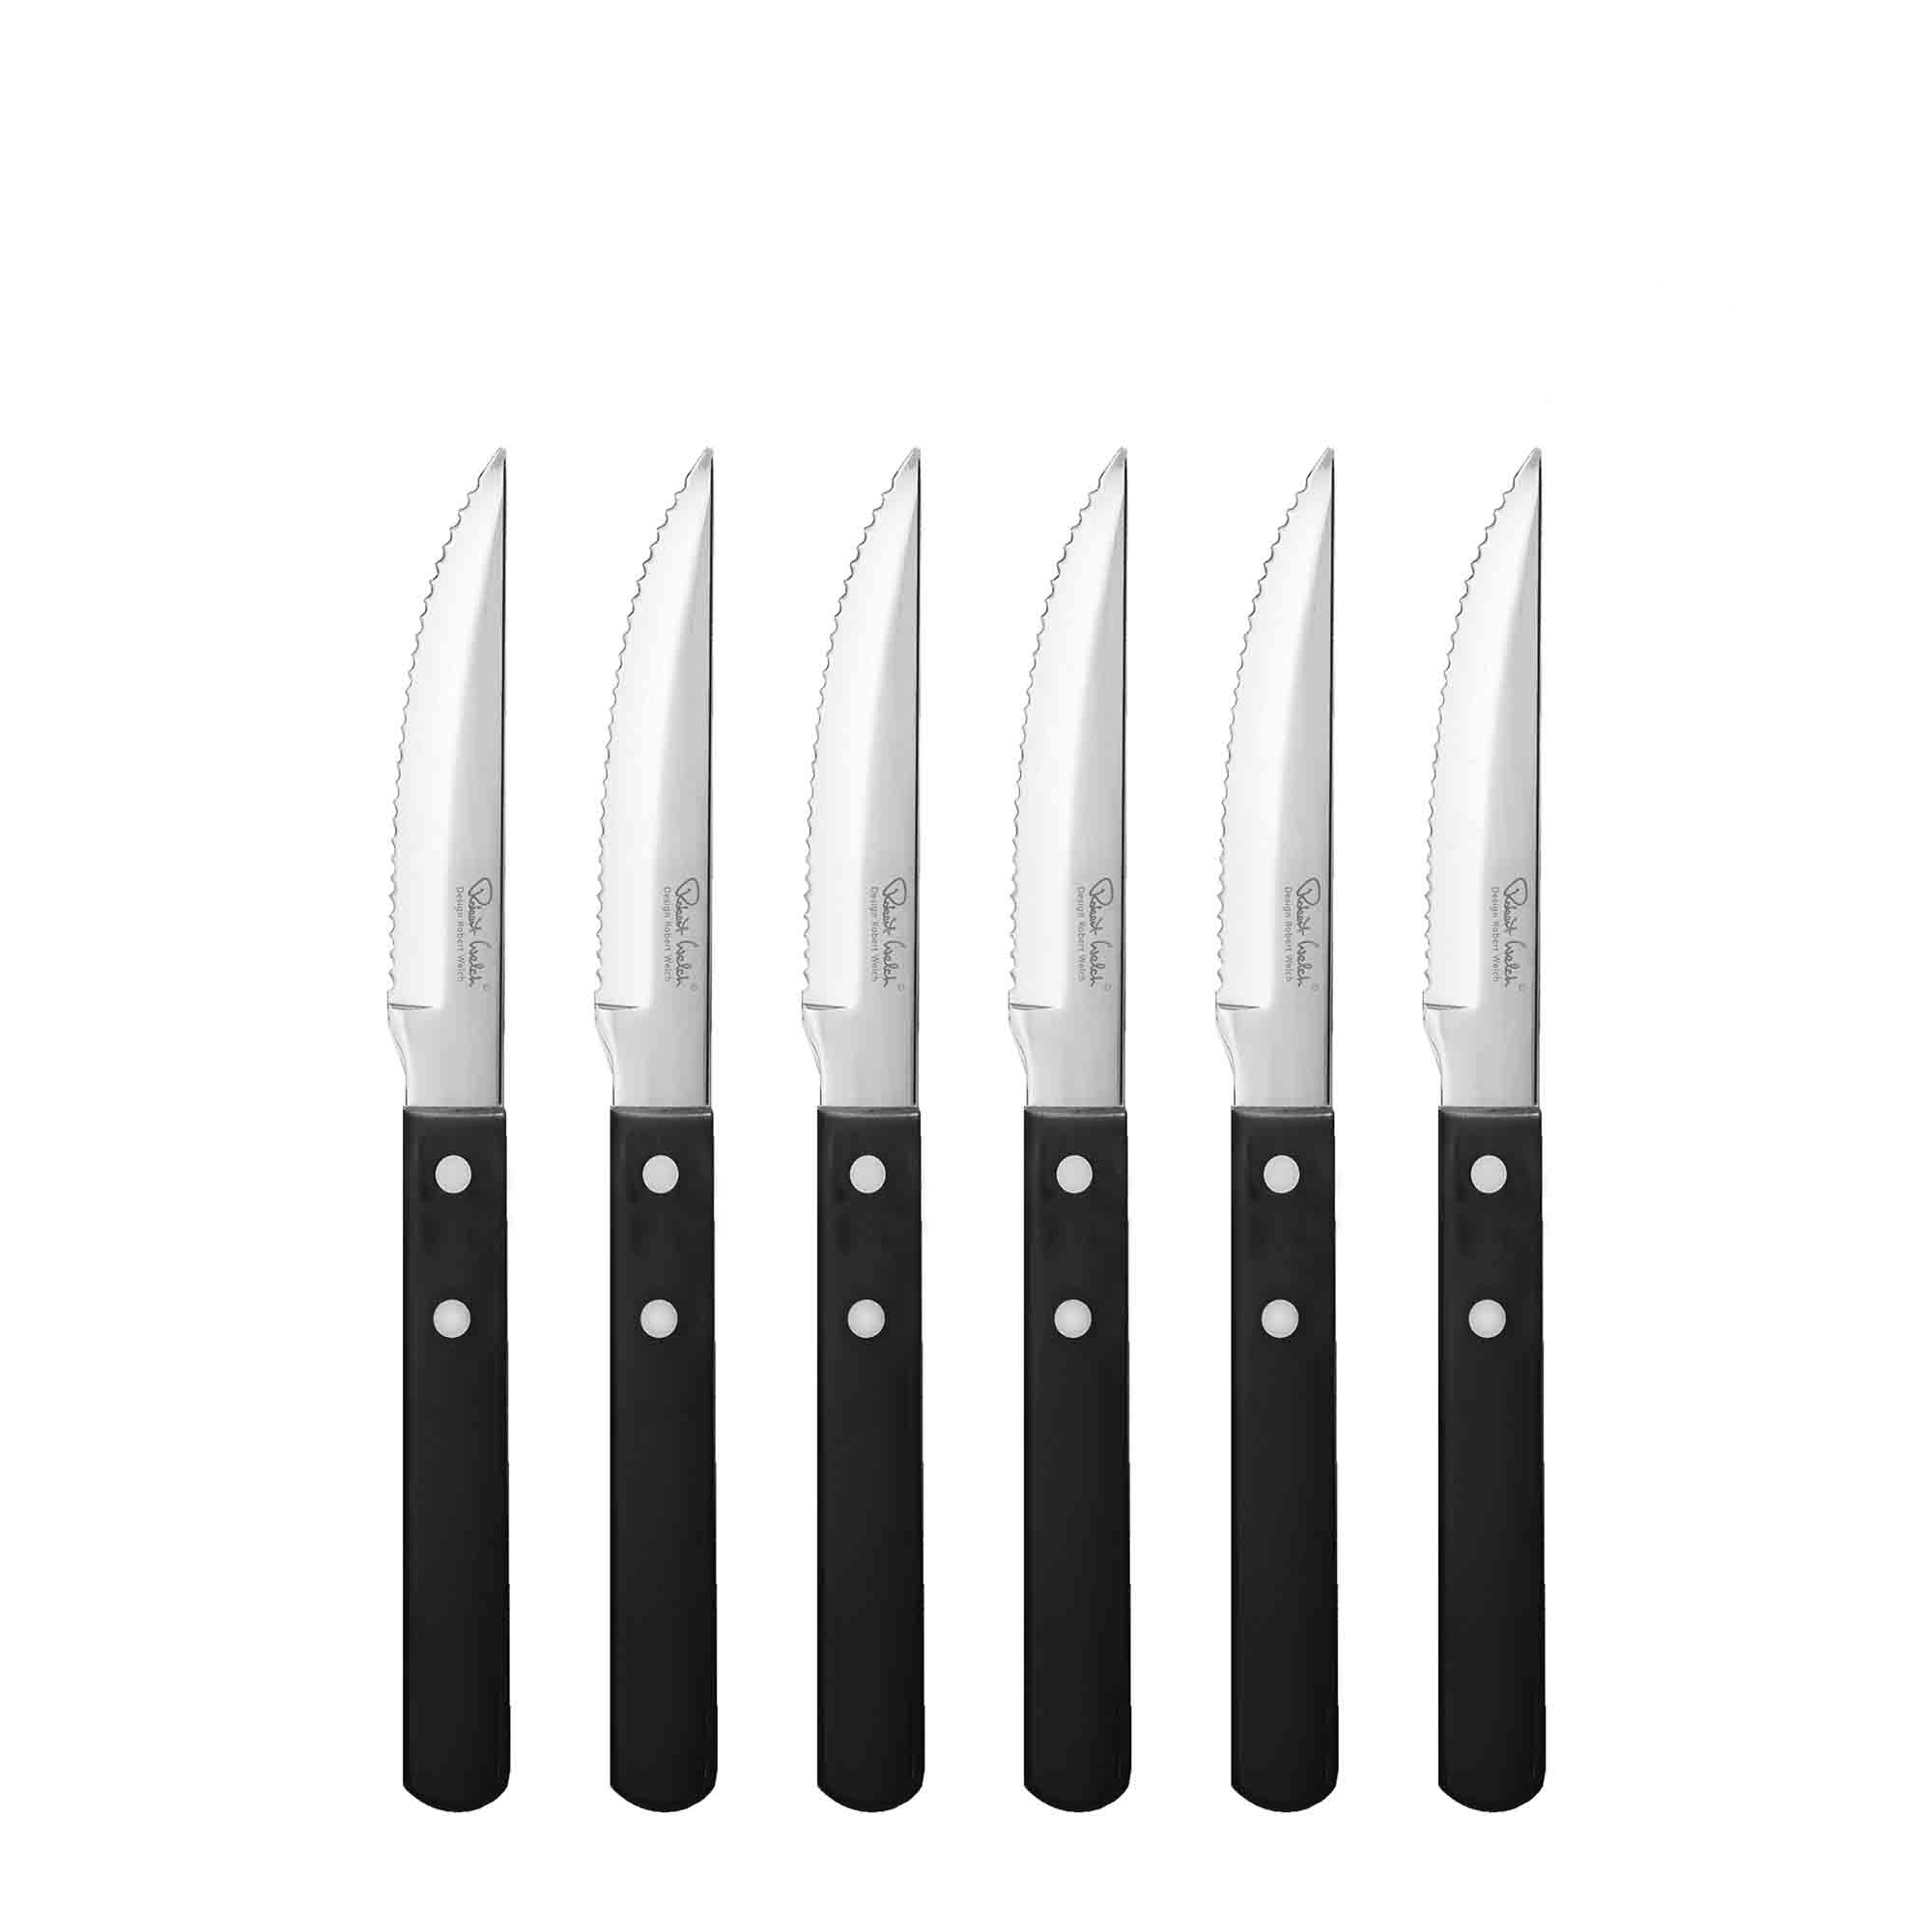 Robert Welch Bistro Steak Knives, Set of 6 + Reviews